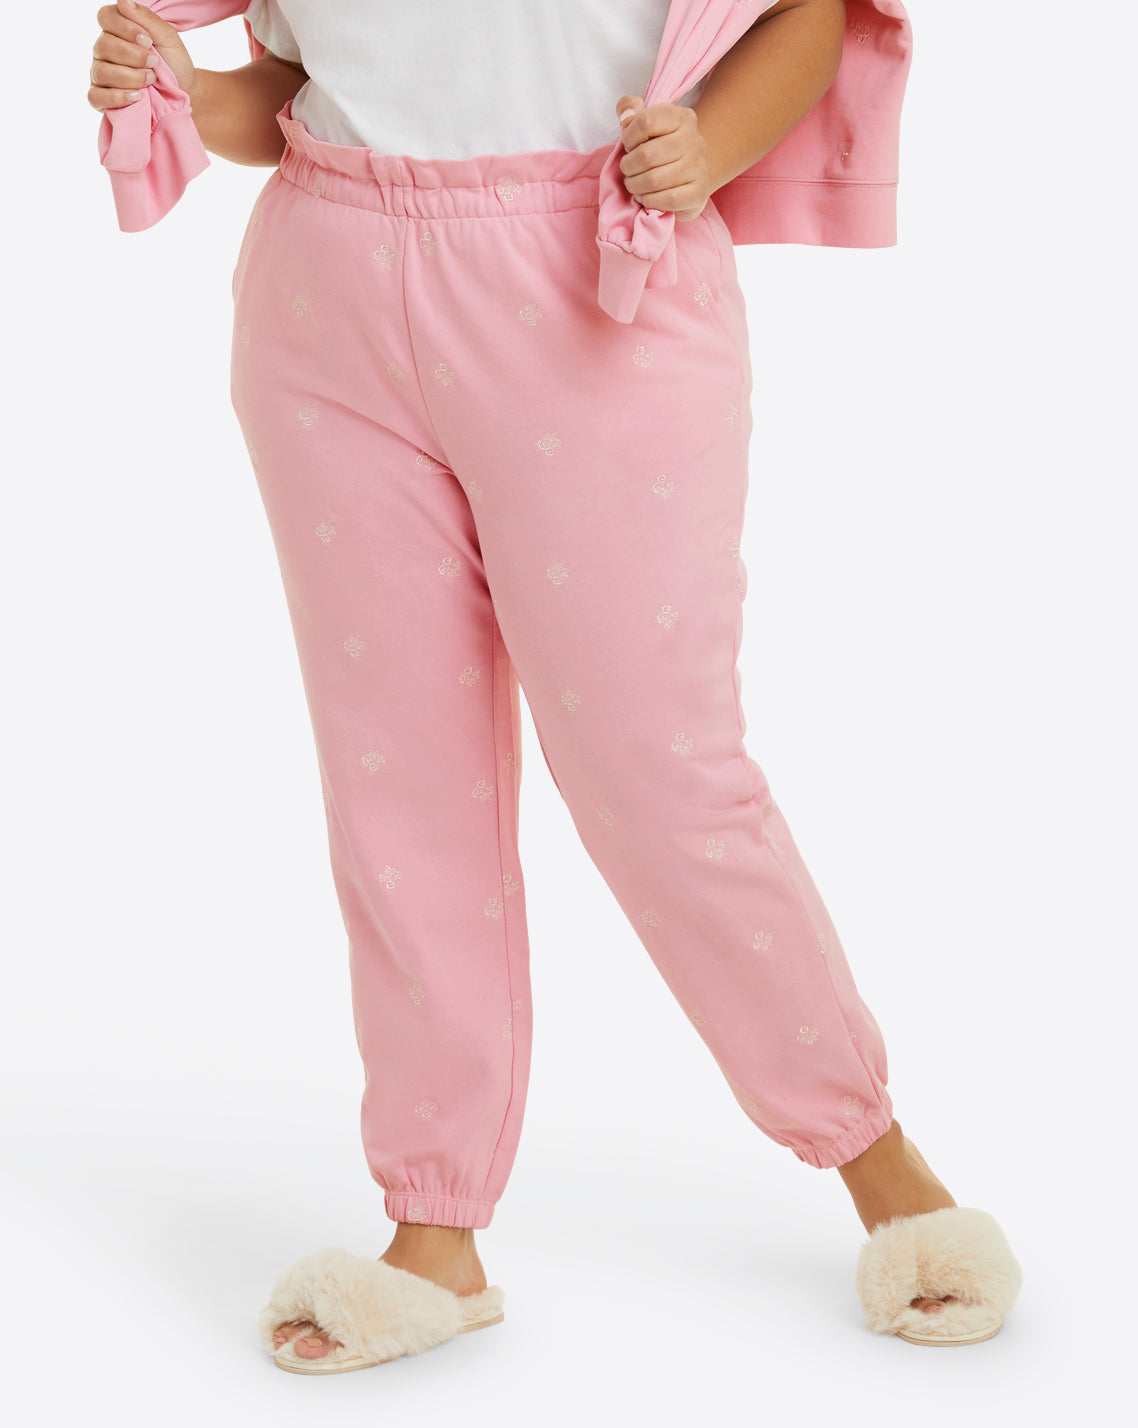 Bobbie Sweatpants in Pink Embroidered Viola